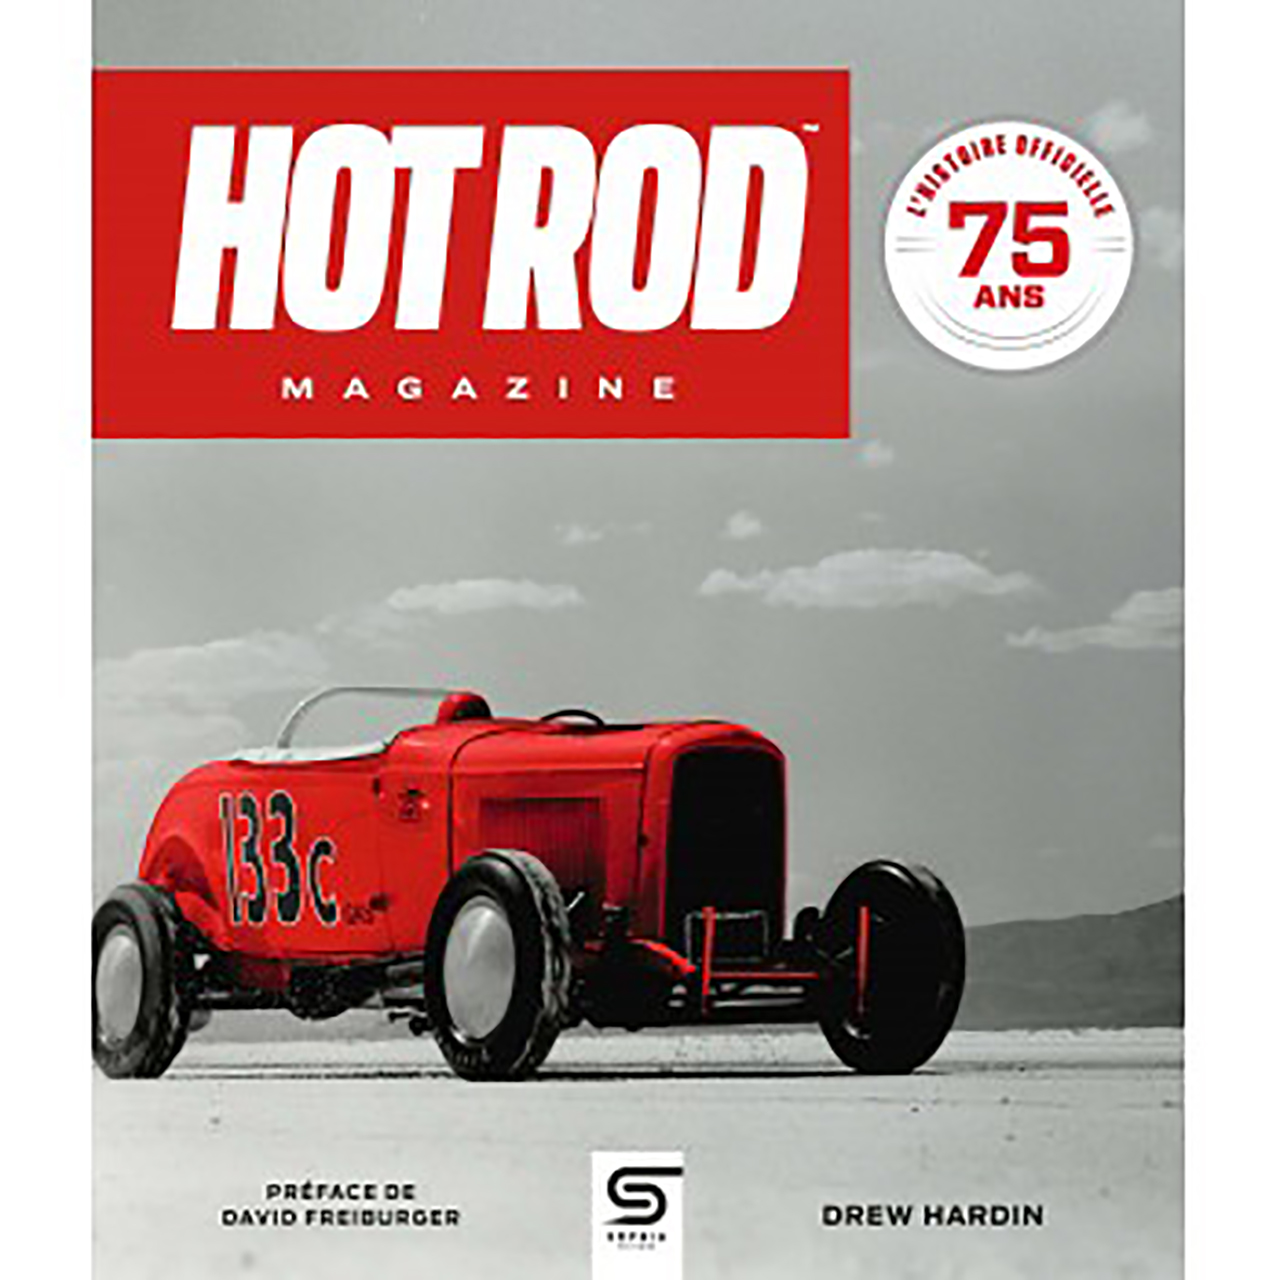 Hot rod magazine 75 ans